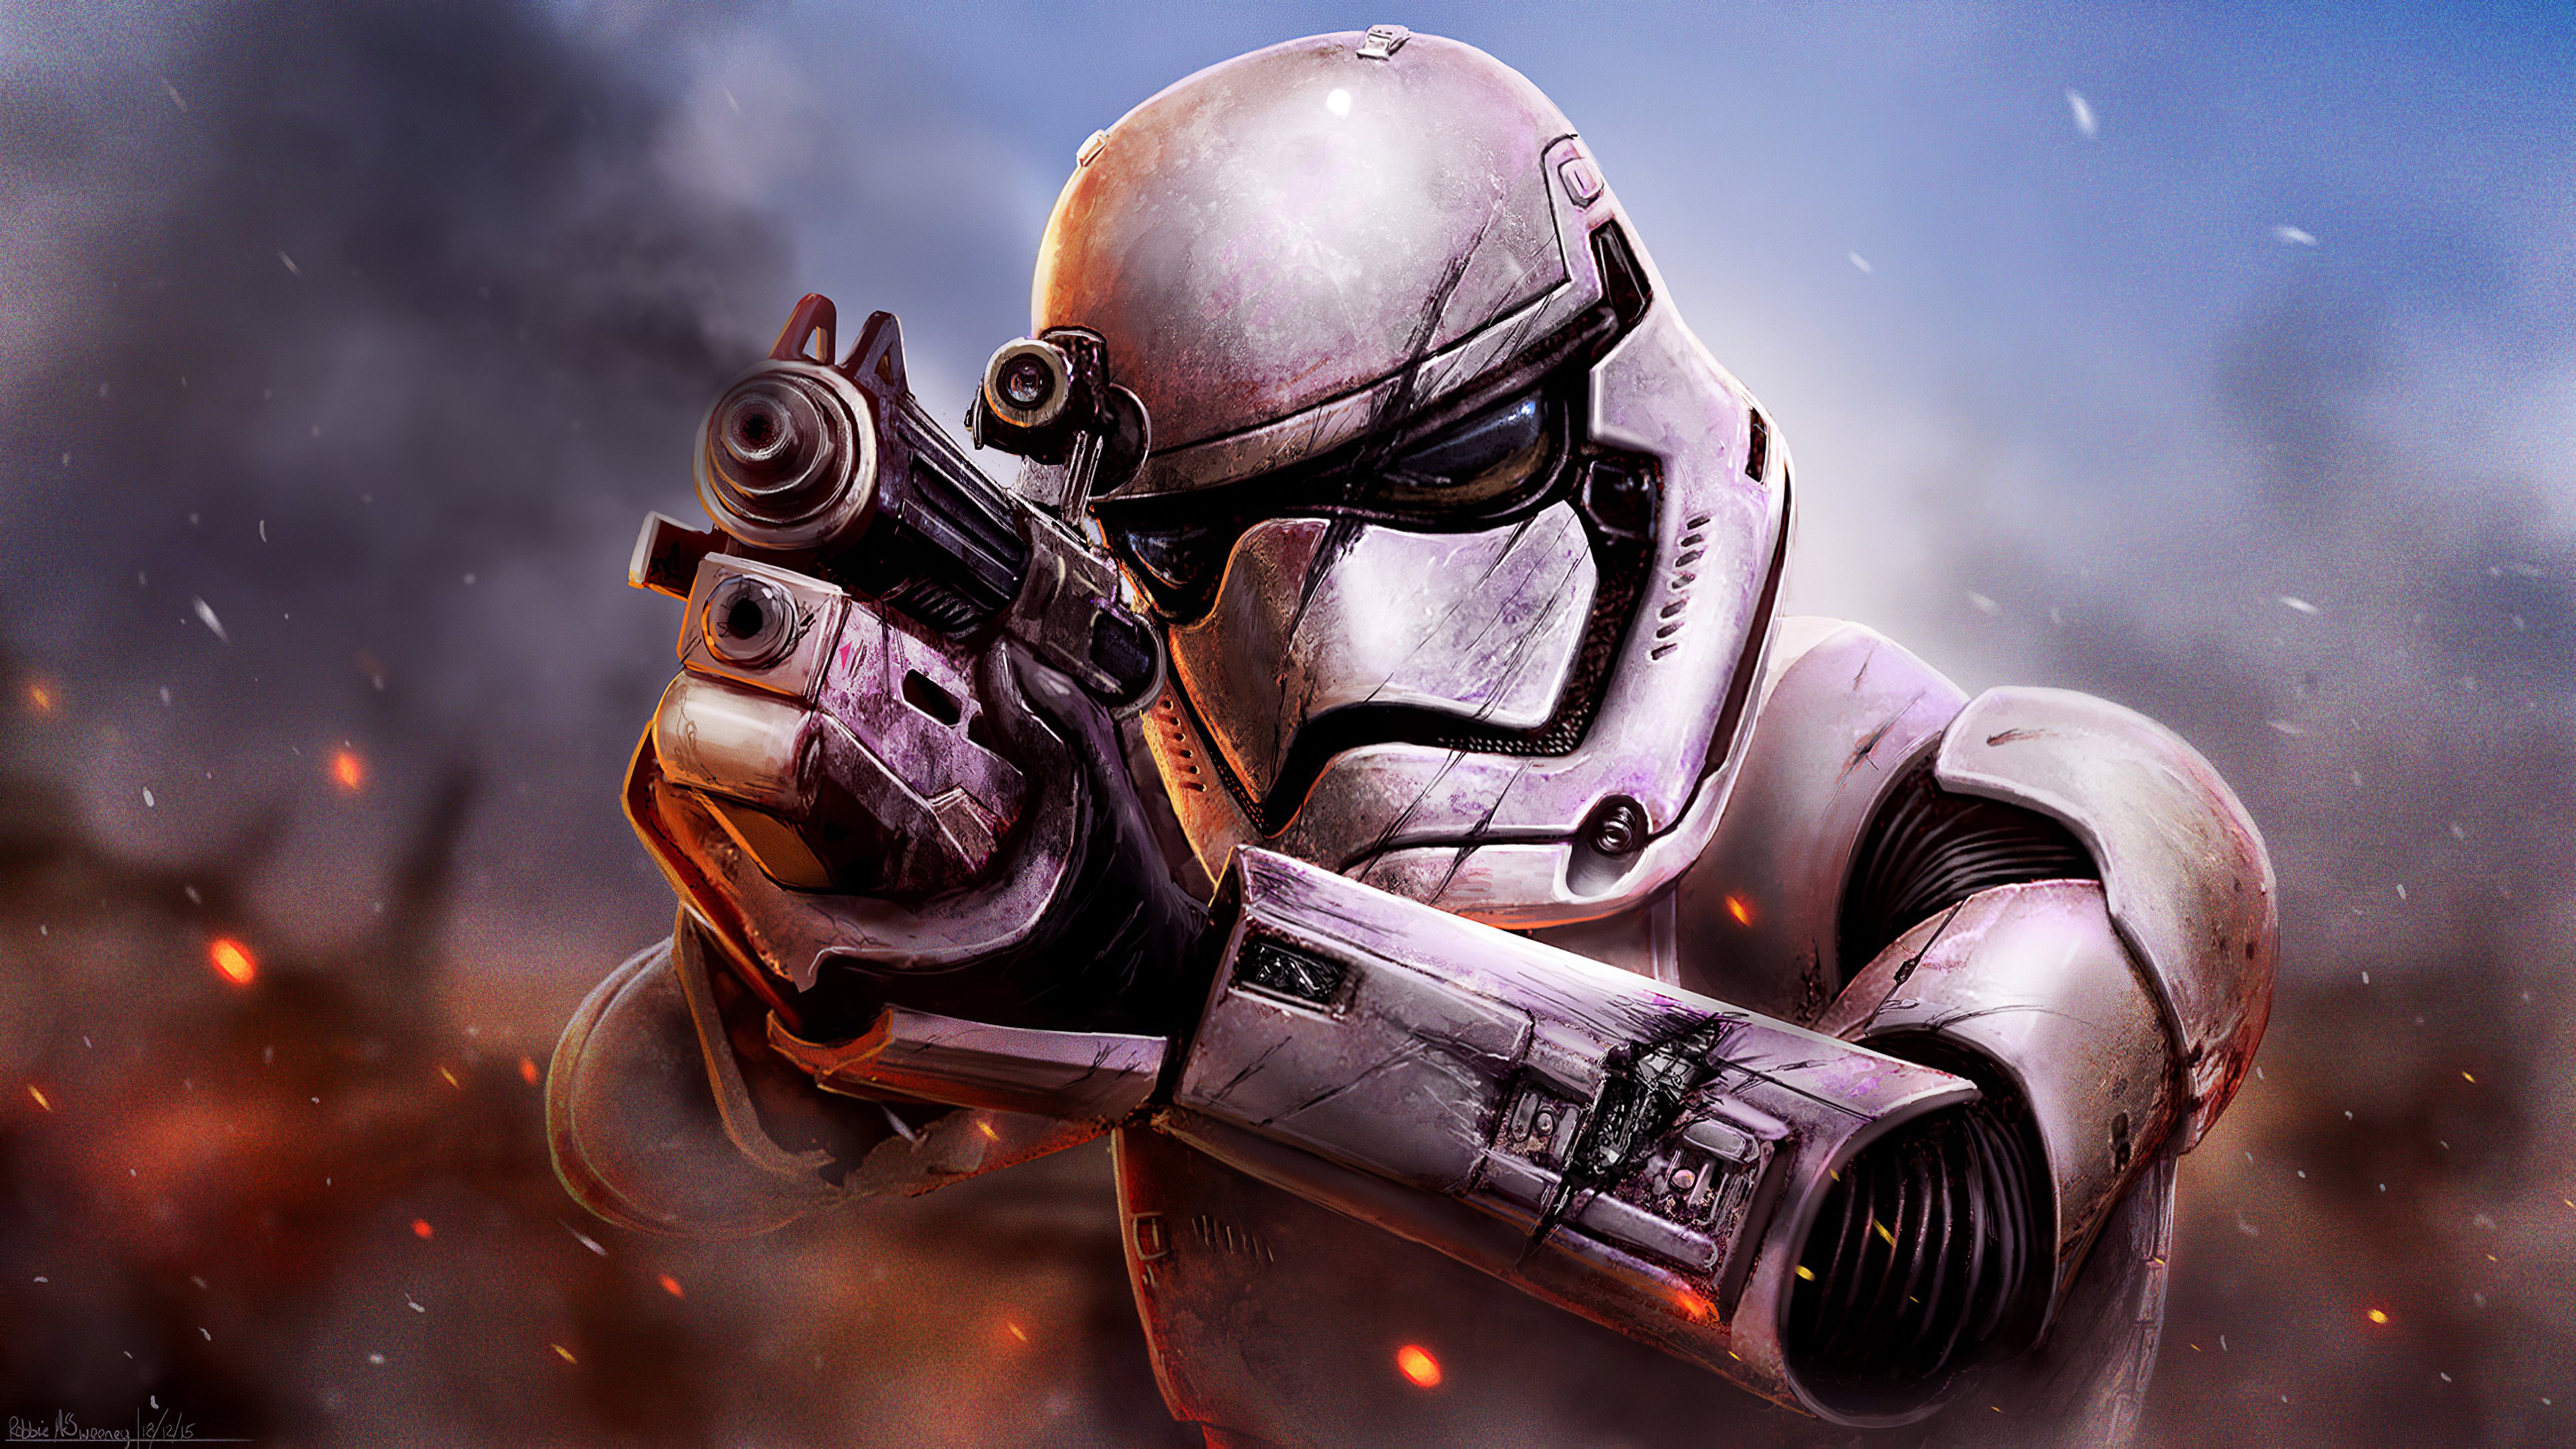 Wallpaper Stormtrooper from Star Wars Battlefront